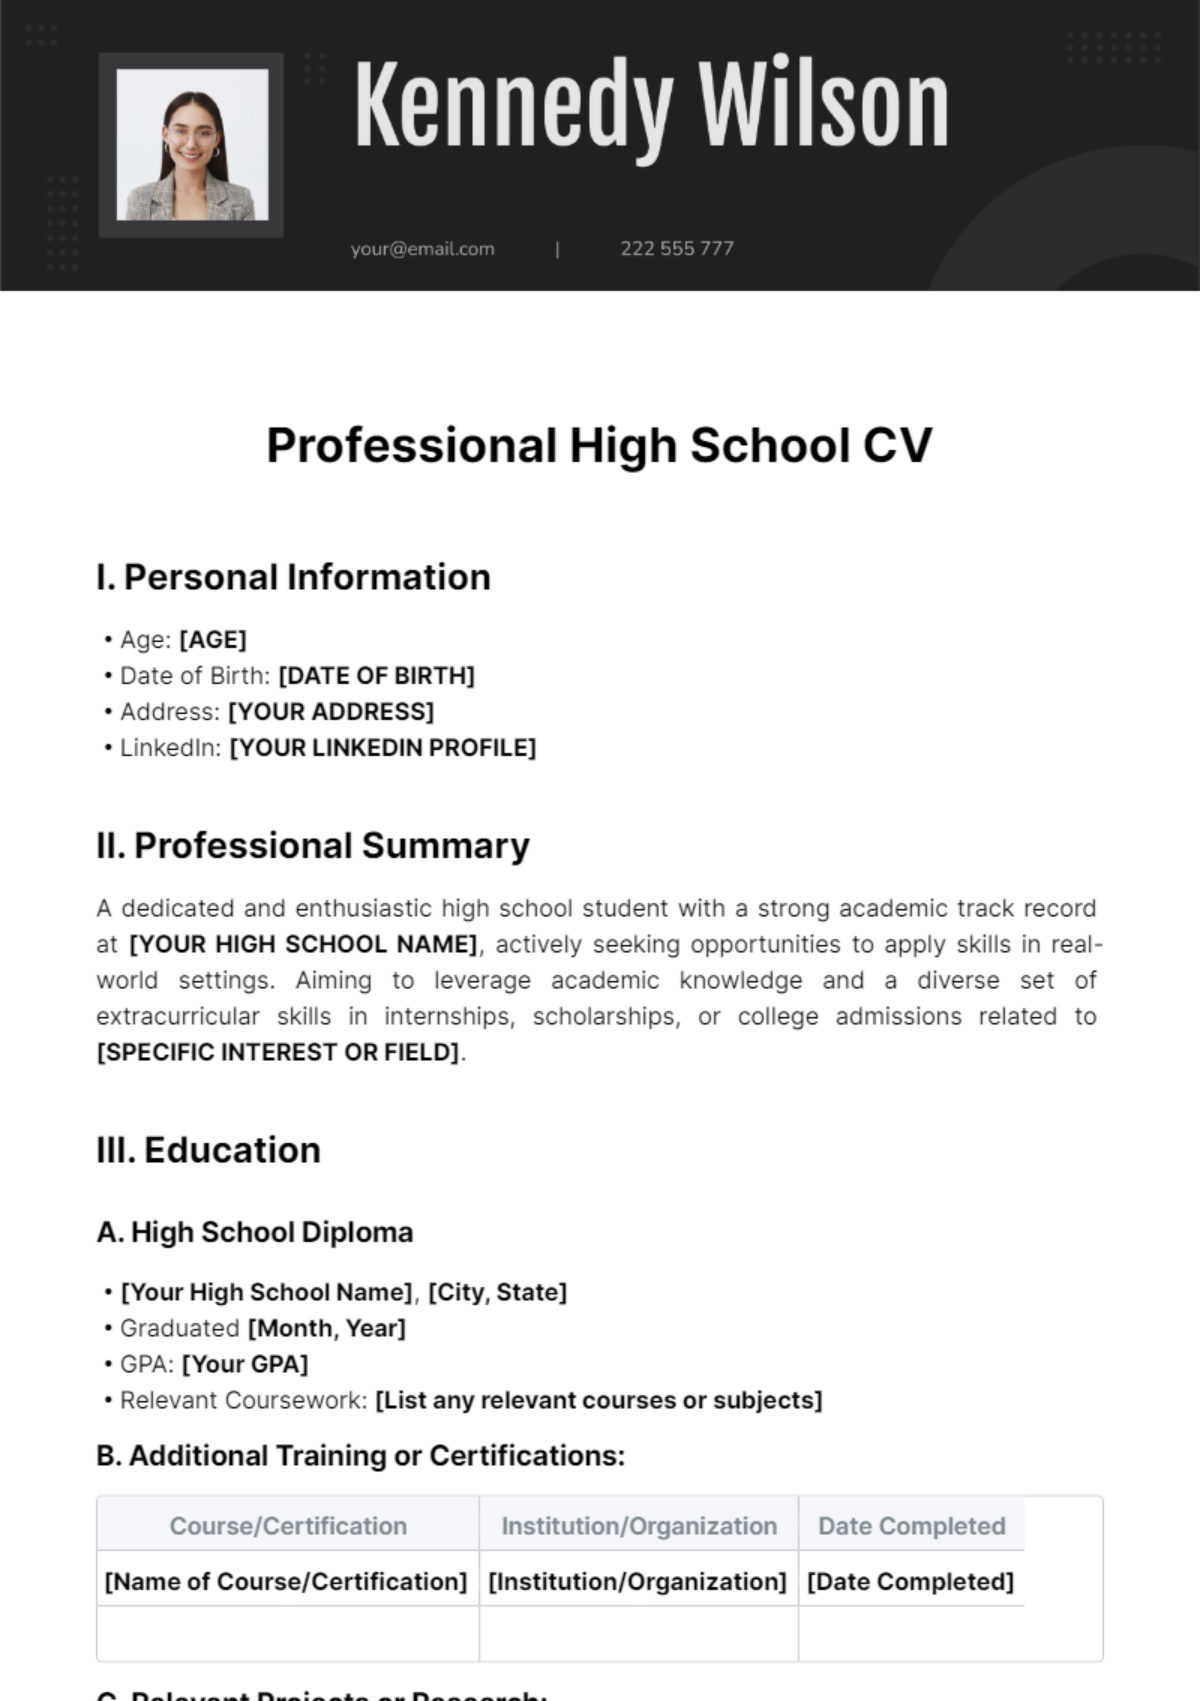 Professional High School CV Template